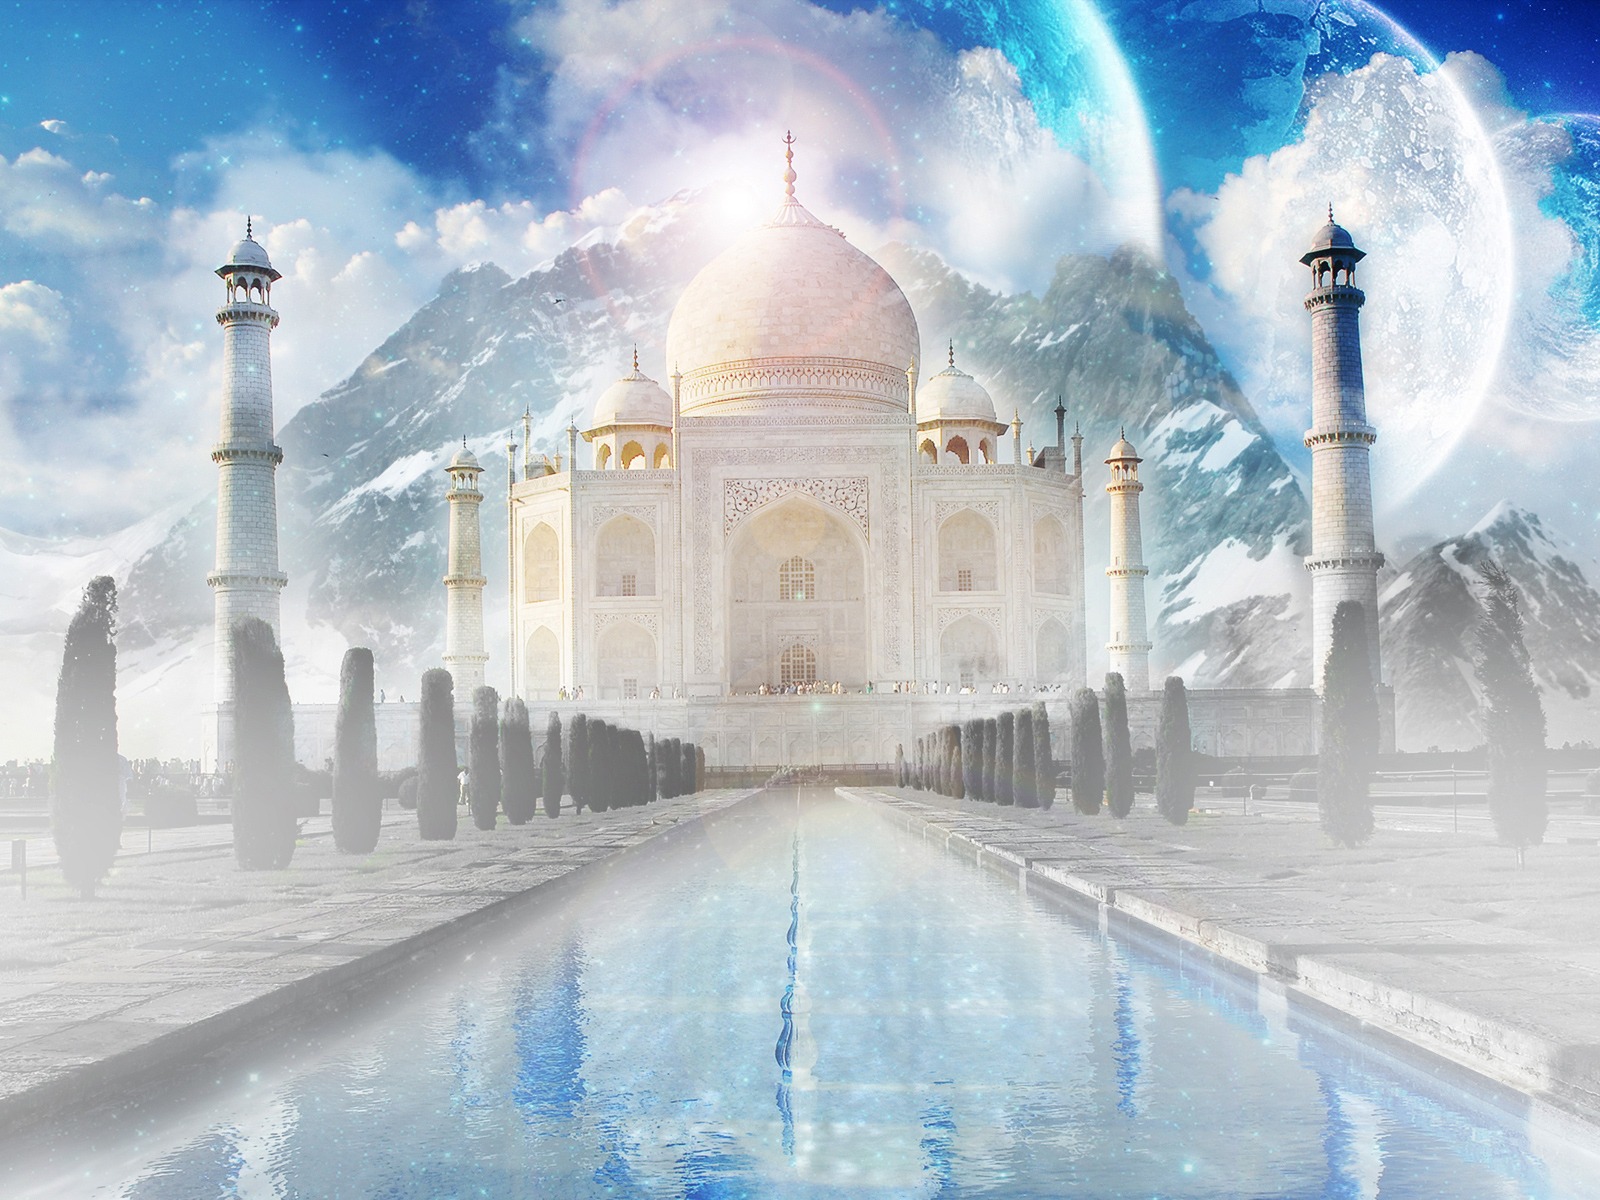 The Taj Mahal Wallpaper India World In Jpg Format For